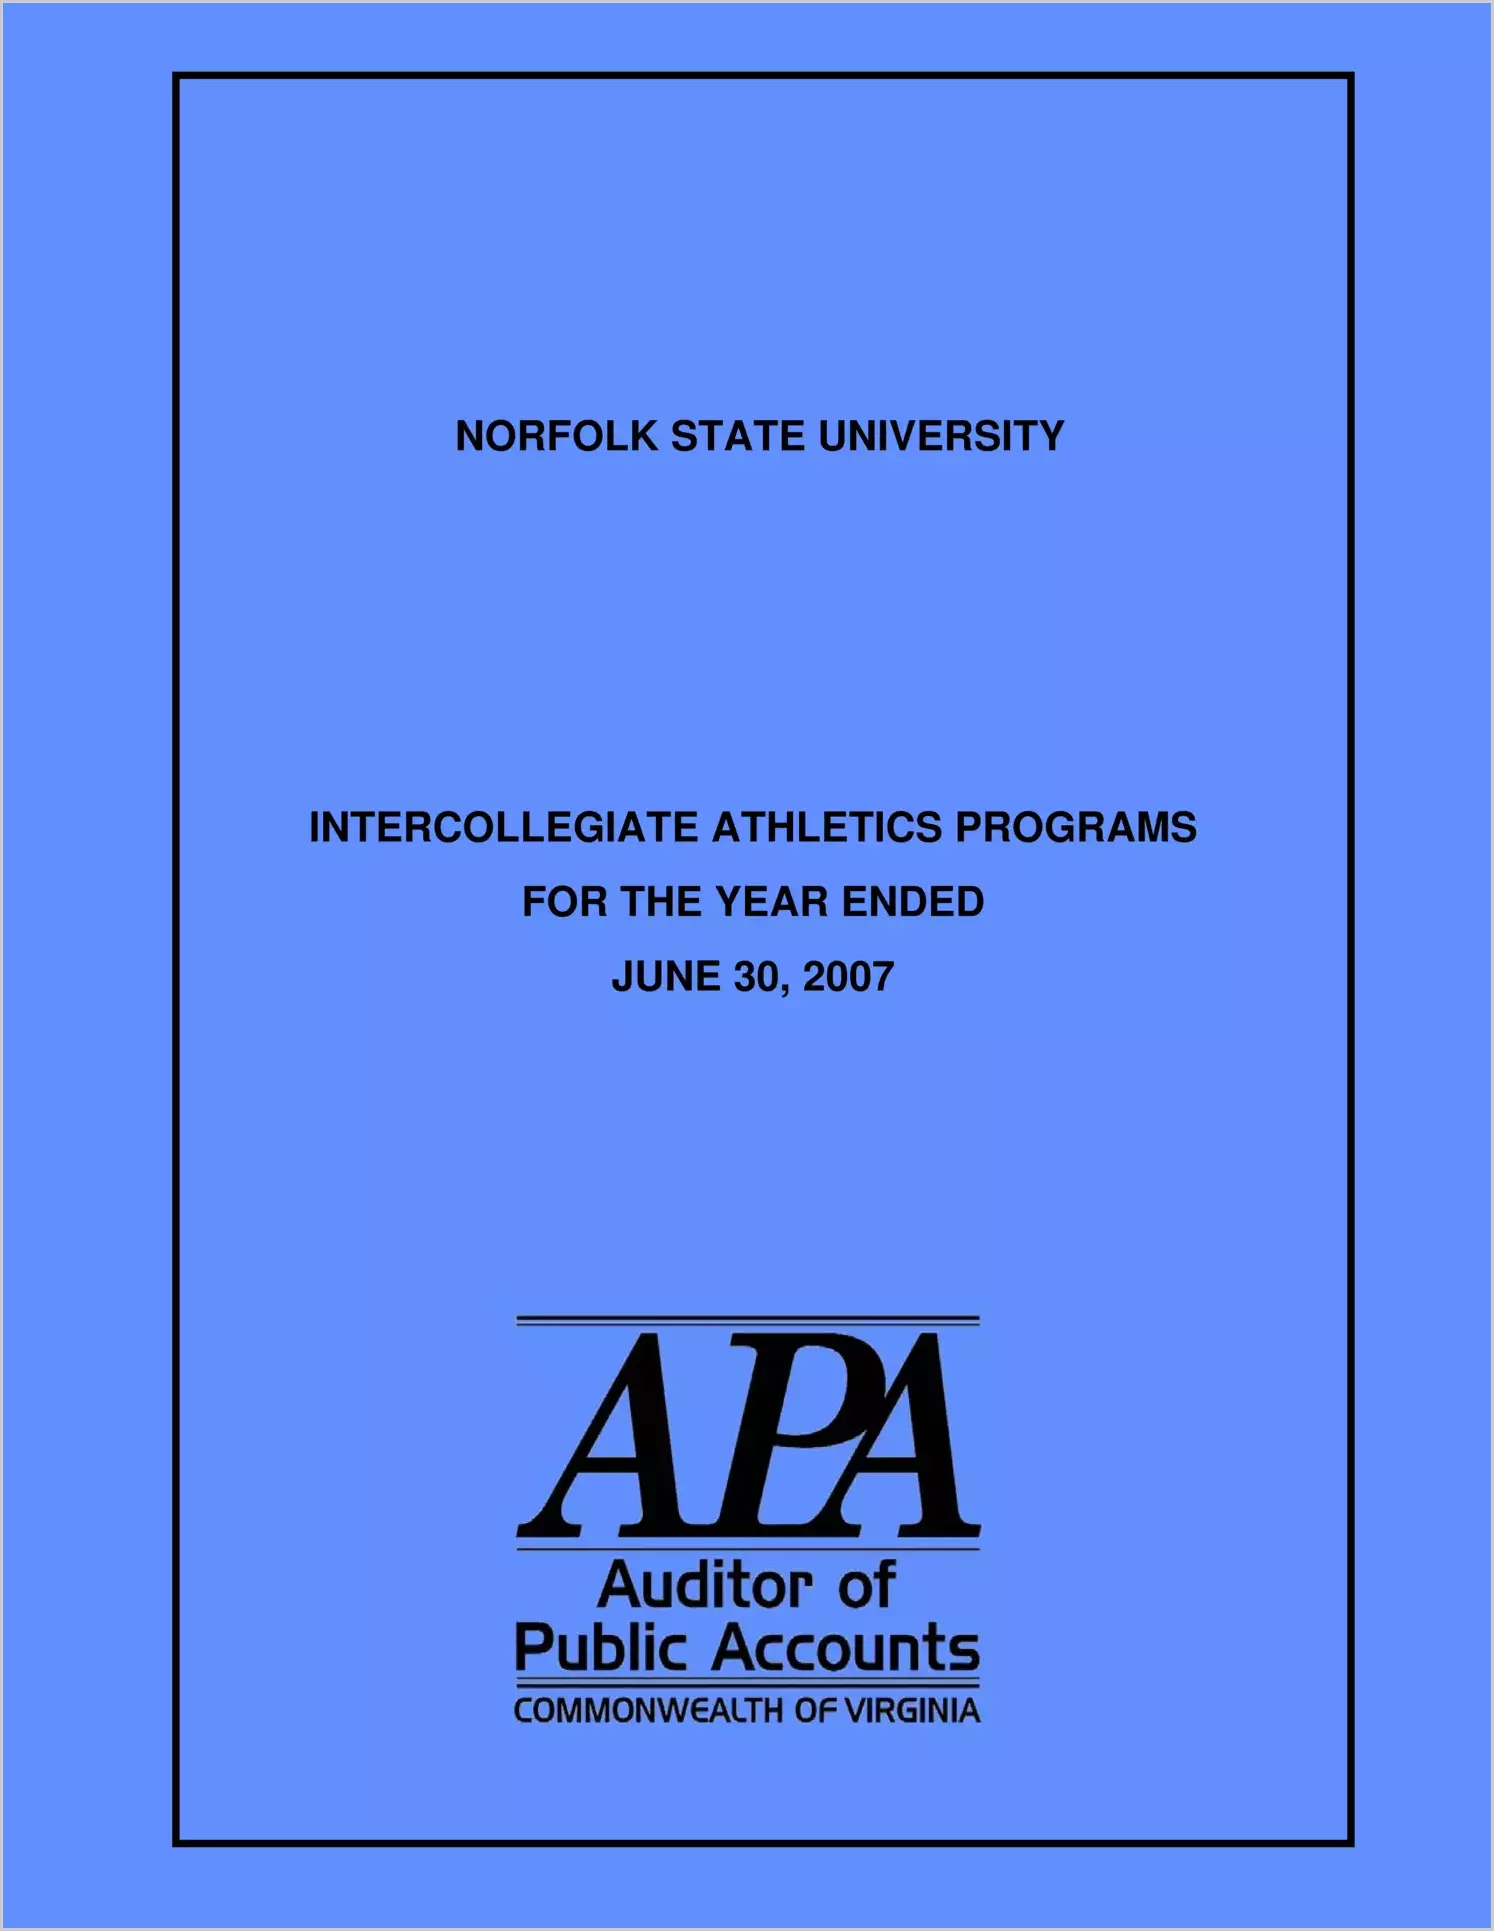 Norfolk State University Intercollegiate Athletics Programs for the year ended June 30, 2007